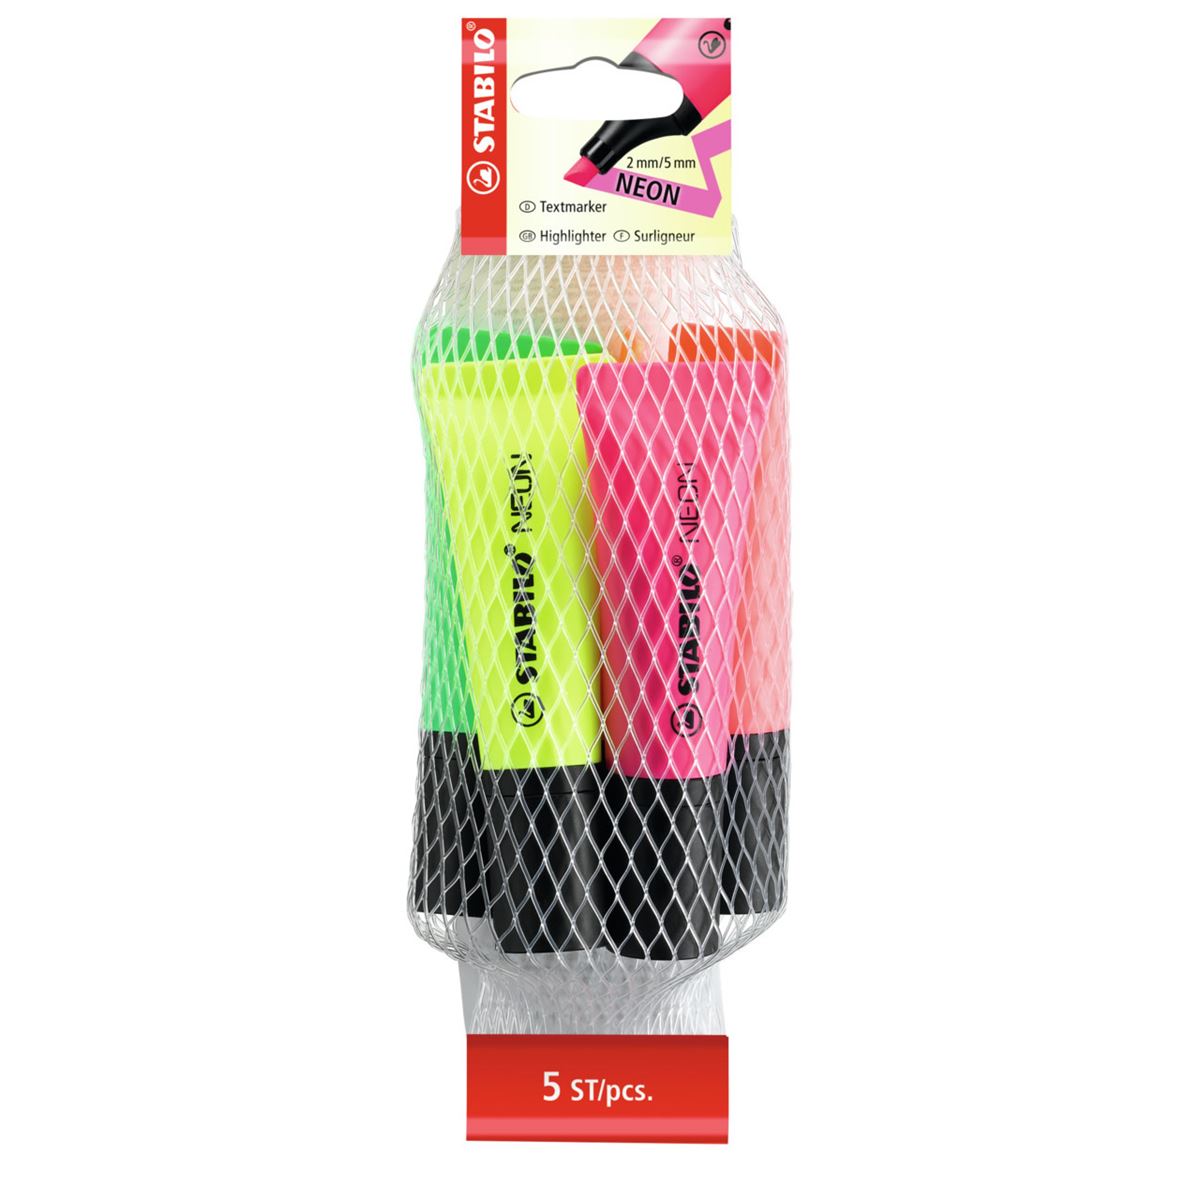 STABILO NEON Highlighters - Set of 5 Fluorescent Pens